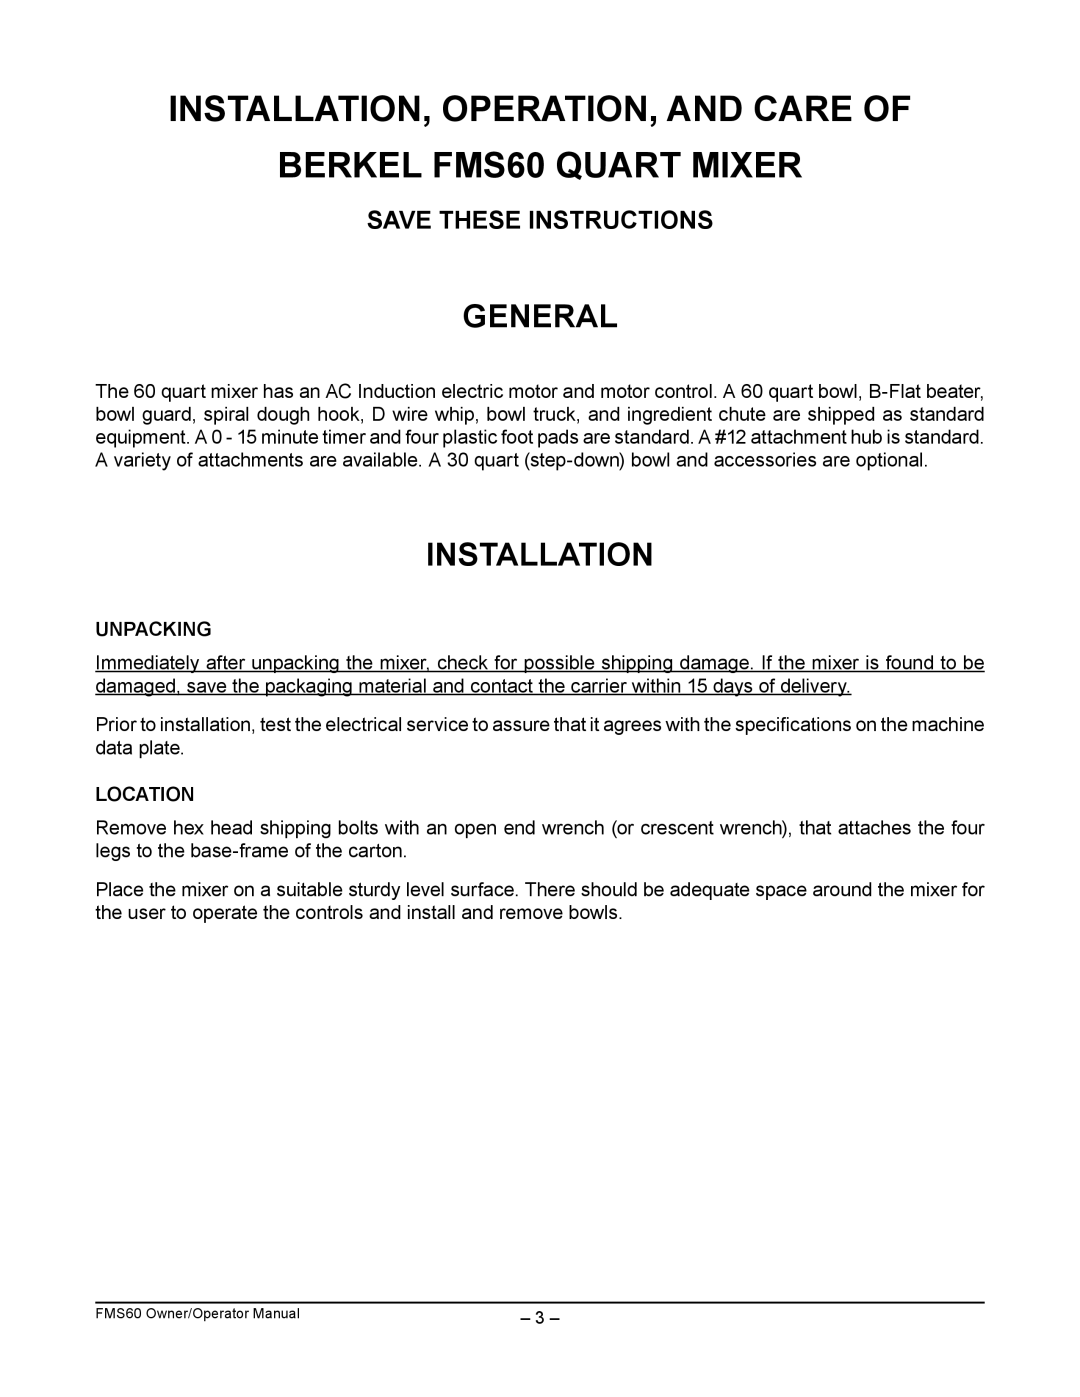 Berkel manual General, Unpacking, Location, Installation, Operation, and Care of BERKEL FMS60 Quart MIXER 